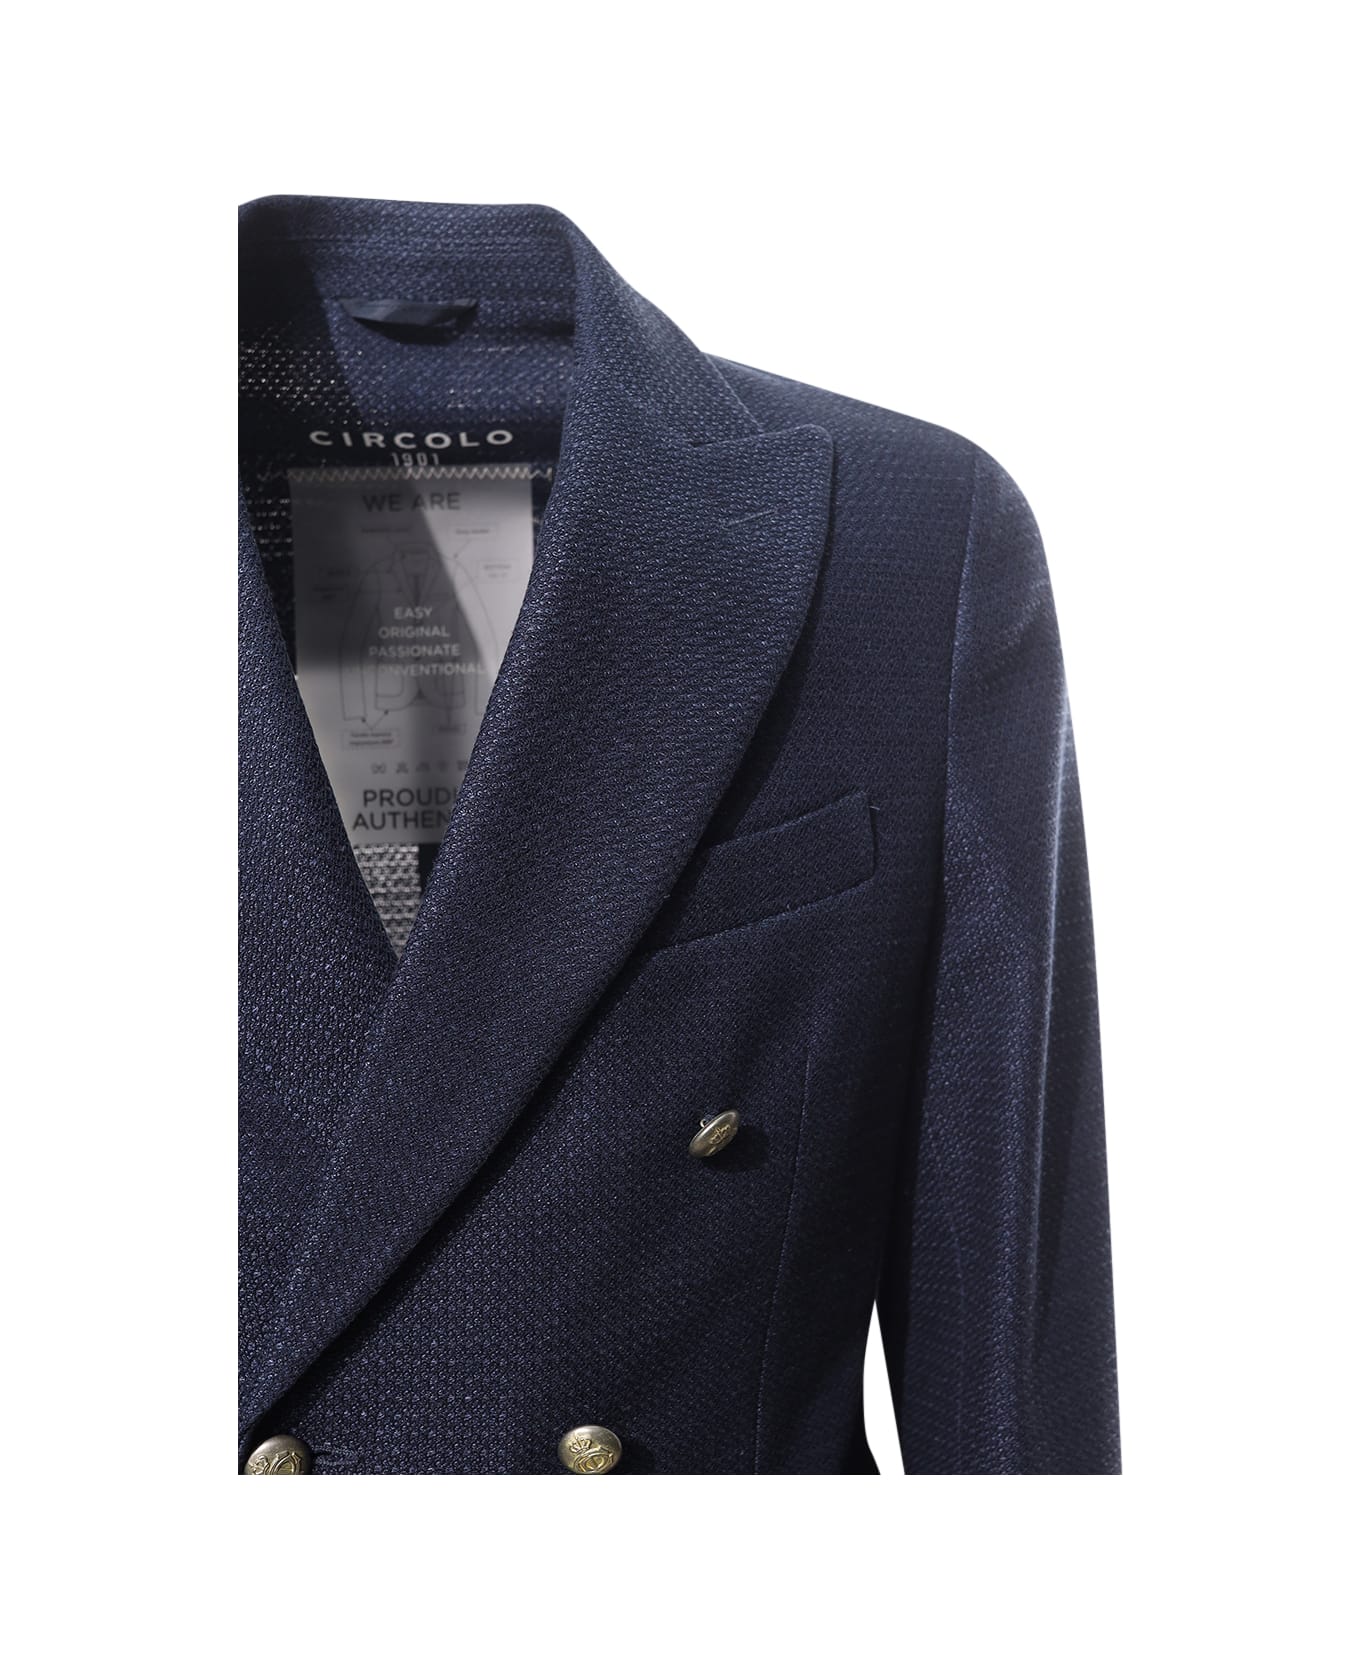 Circolo 1901 Double-breasted Jacket Circolo - Blue ブレザー